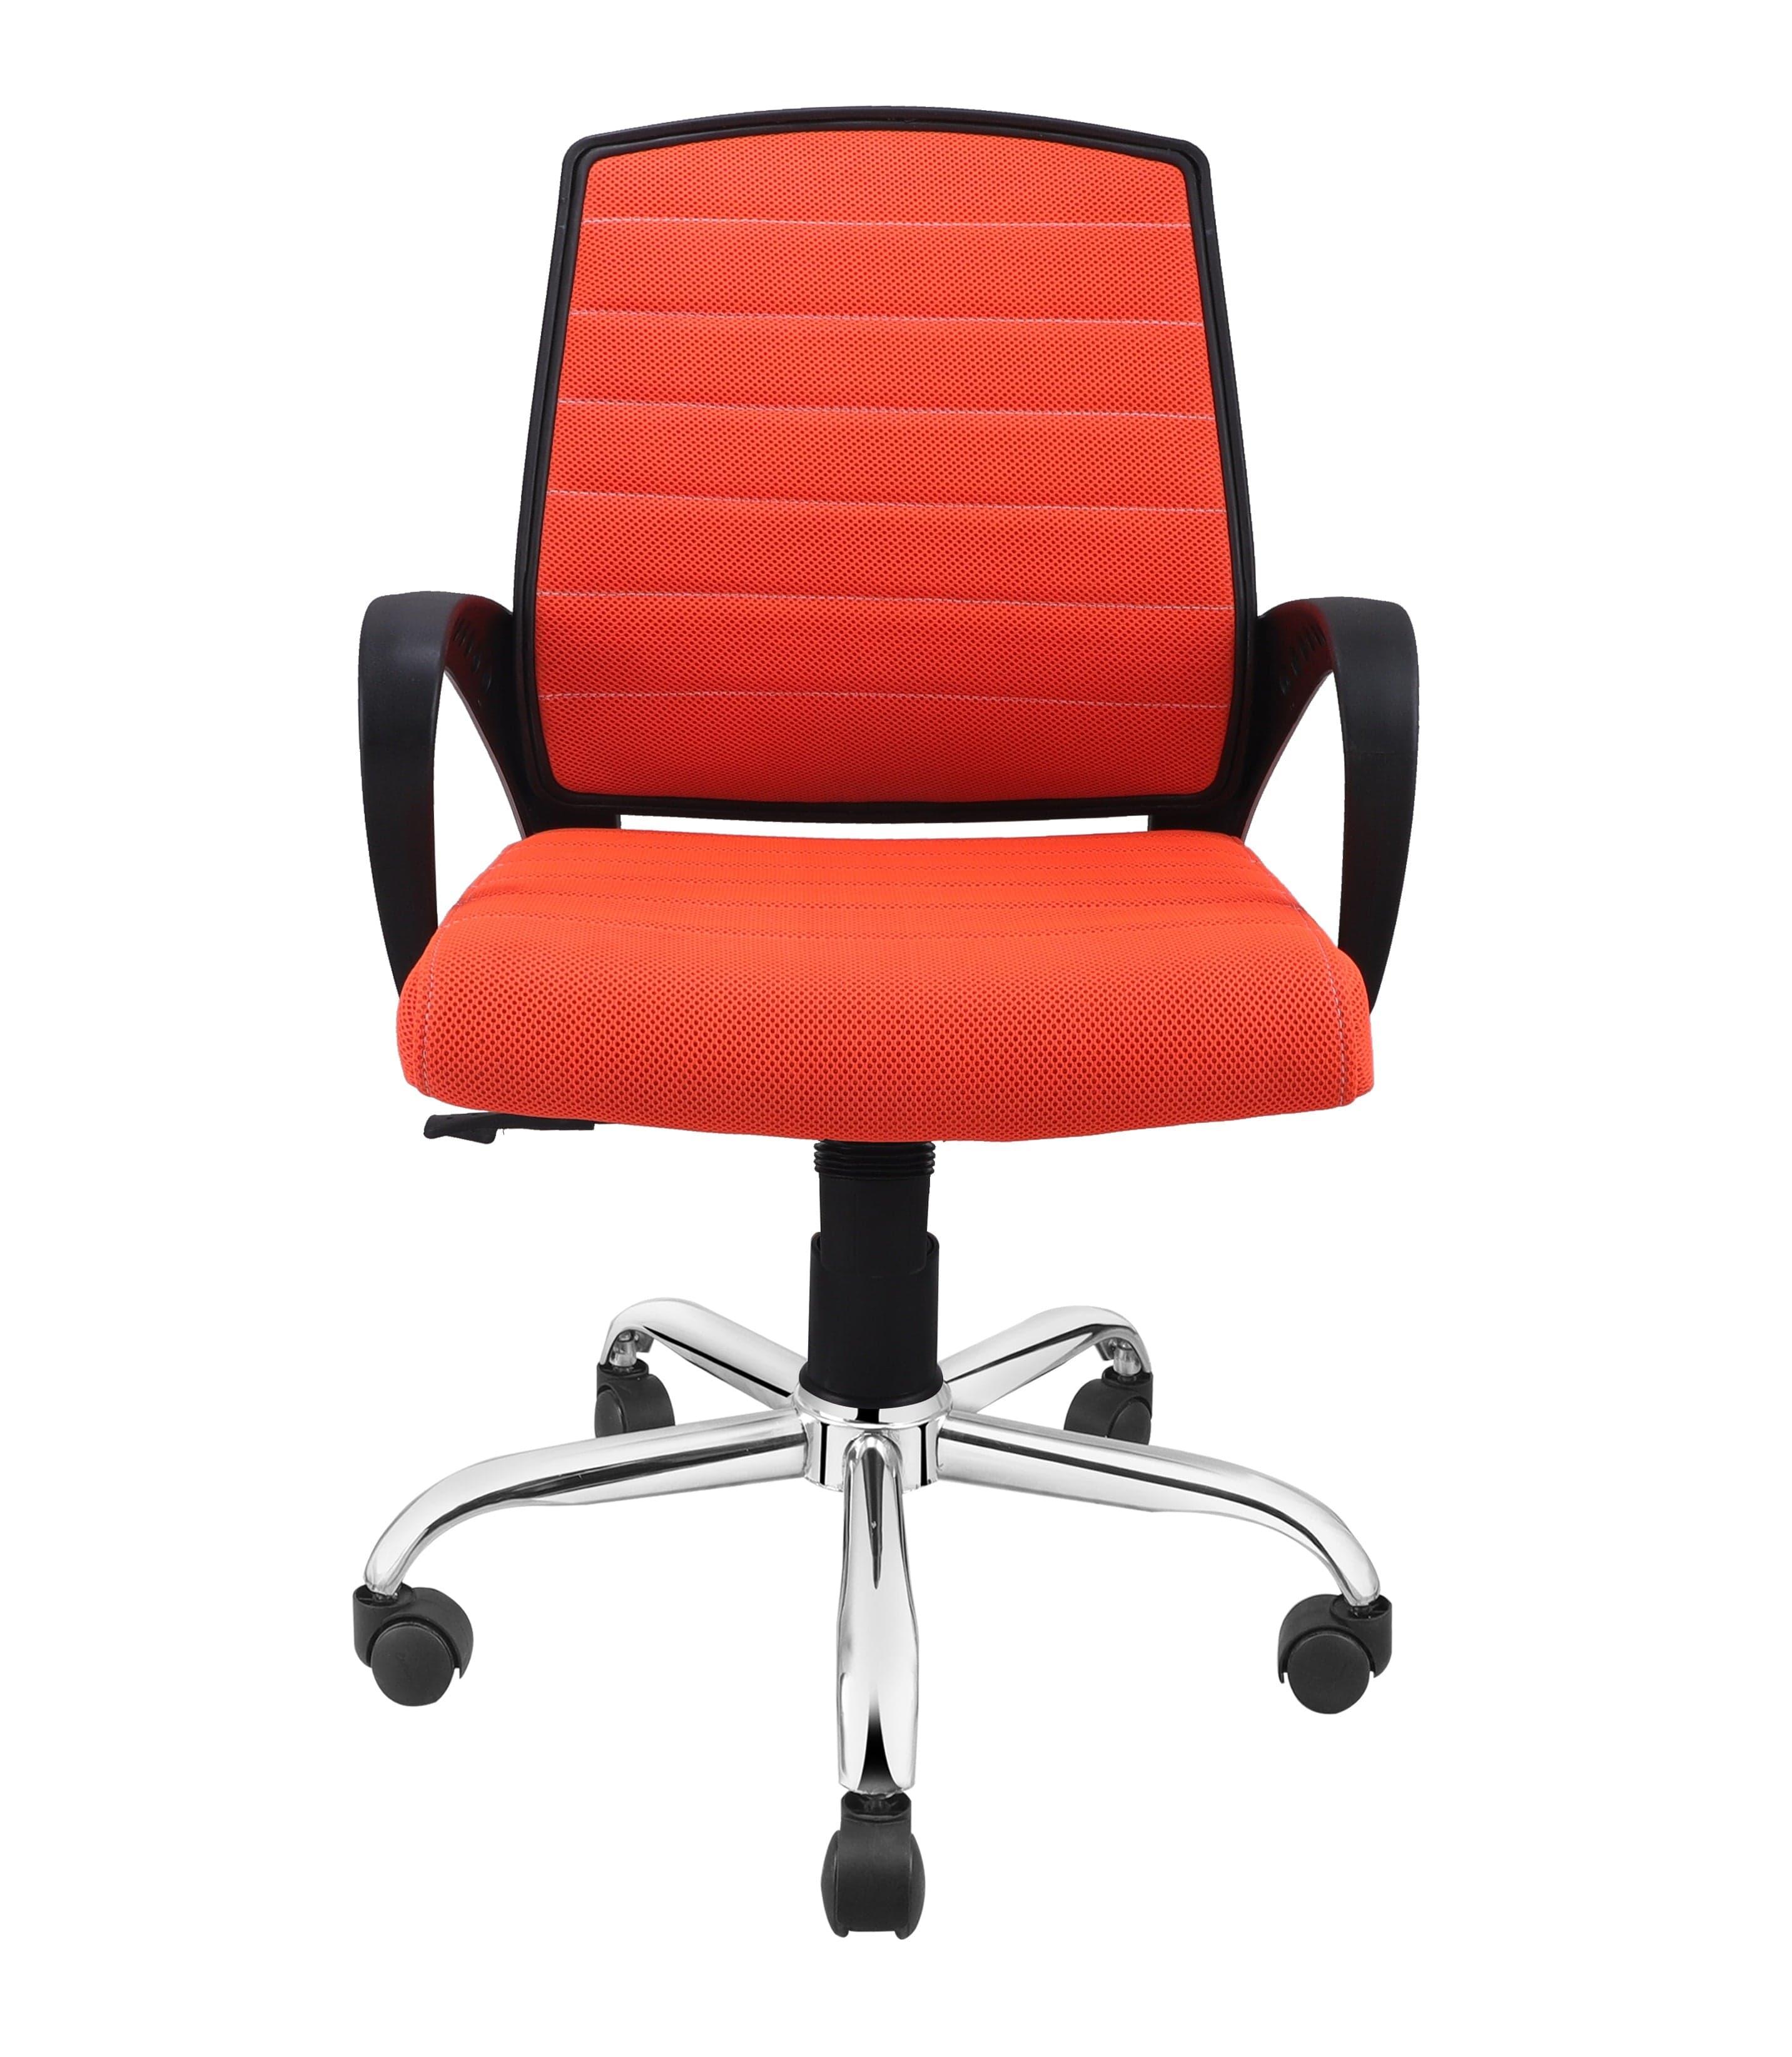 Smart Ergonomic Chair With Breathable Orange Mesh Fabric